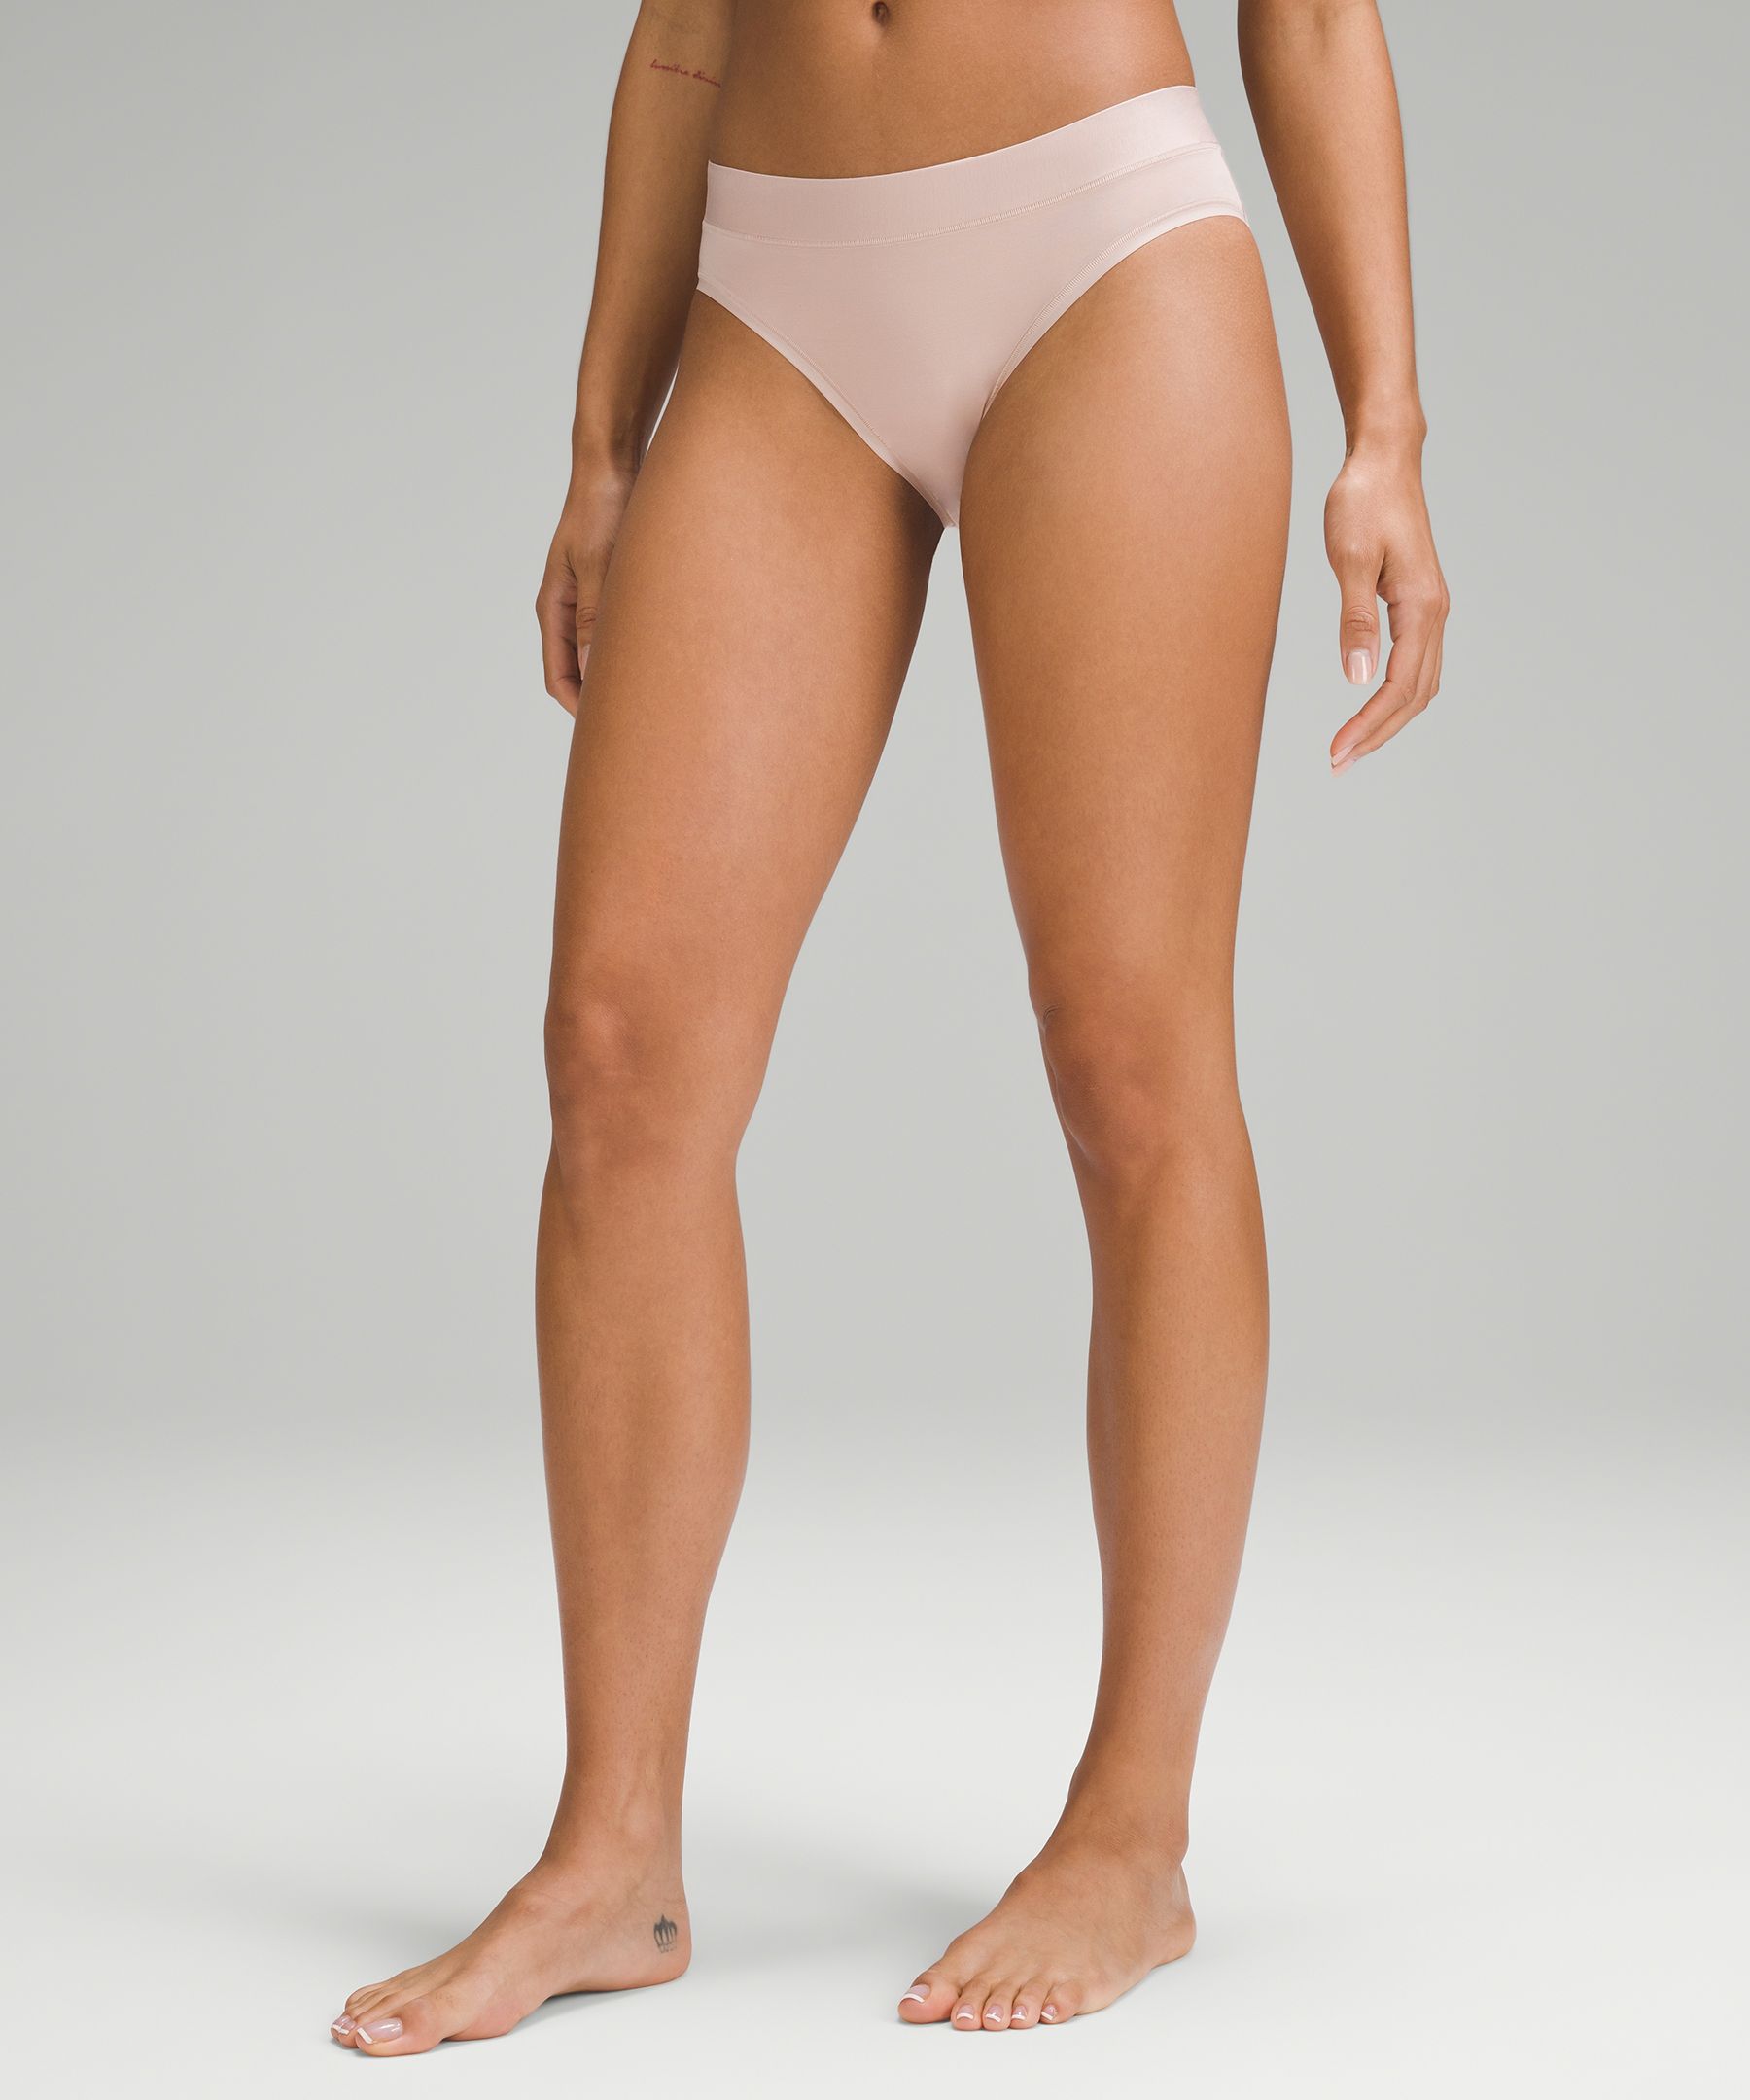 Lululemon athletica UnderEase Mid-Rise Bikini Underwear 5 Pack, Women's